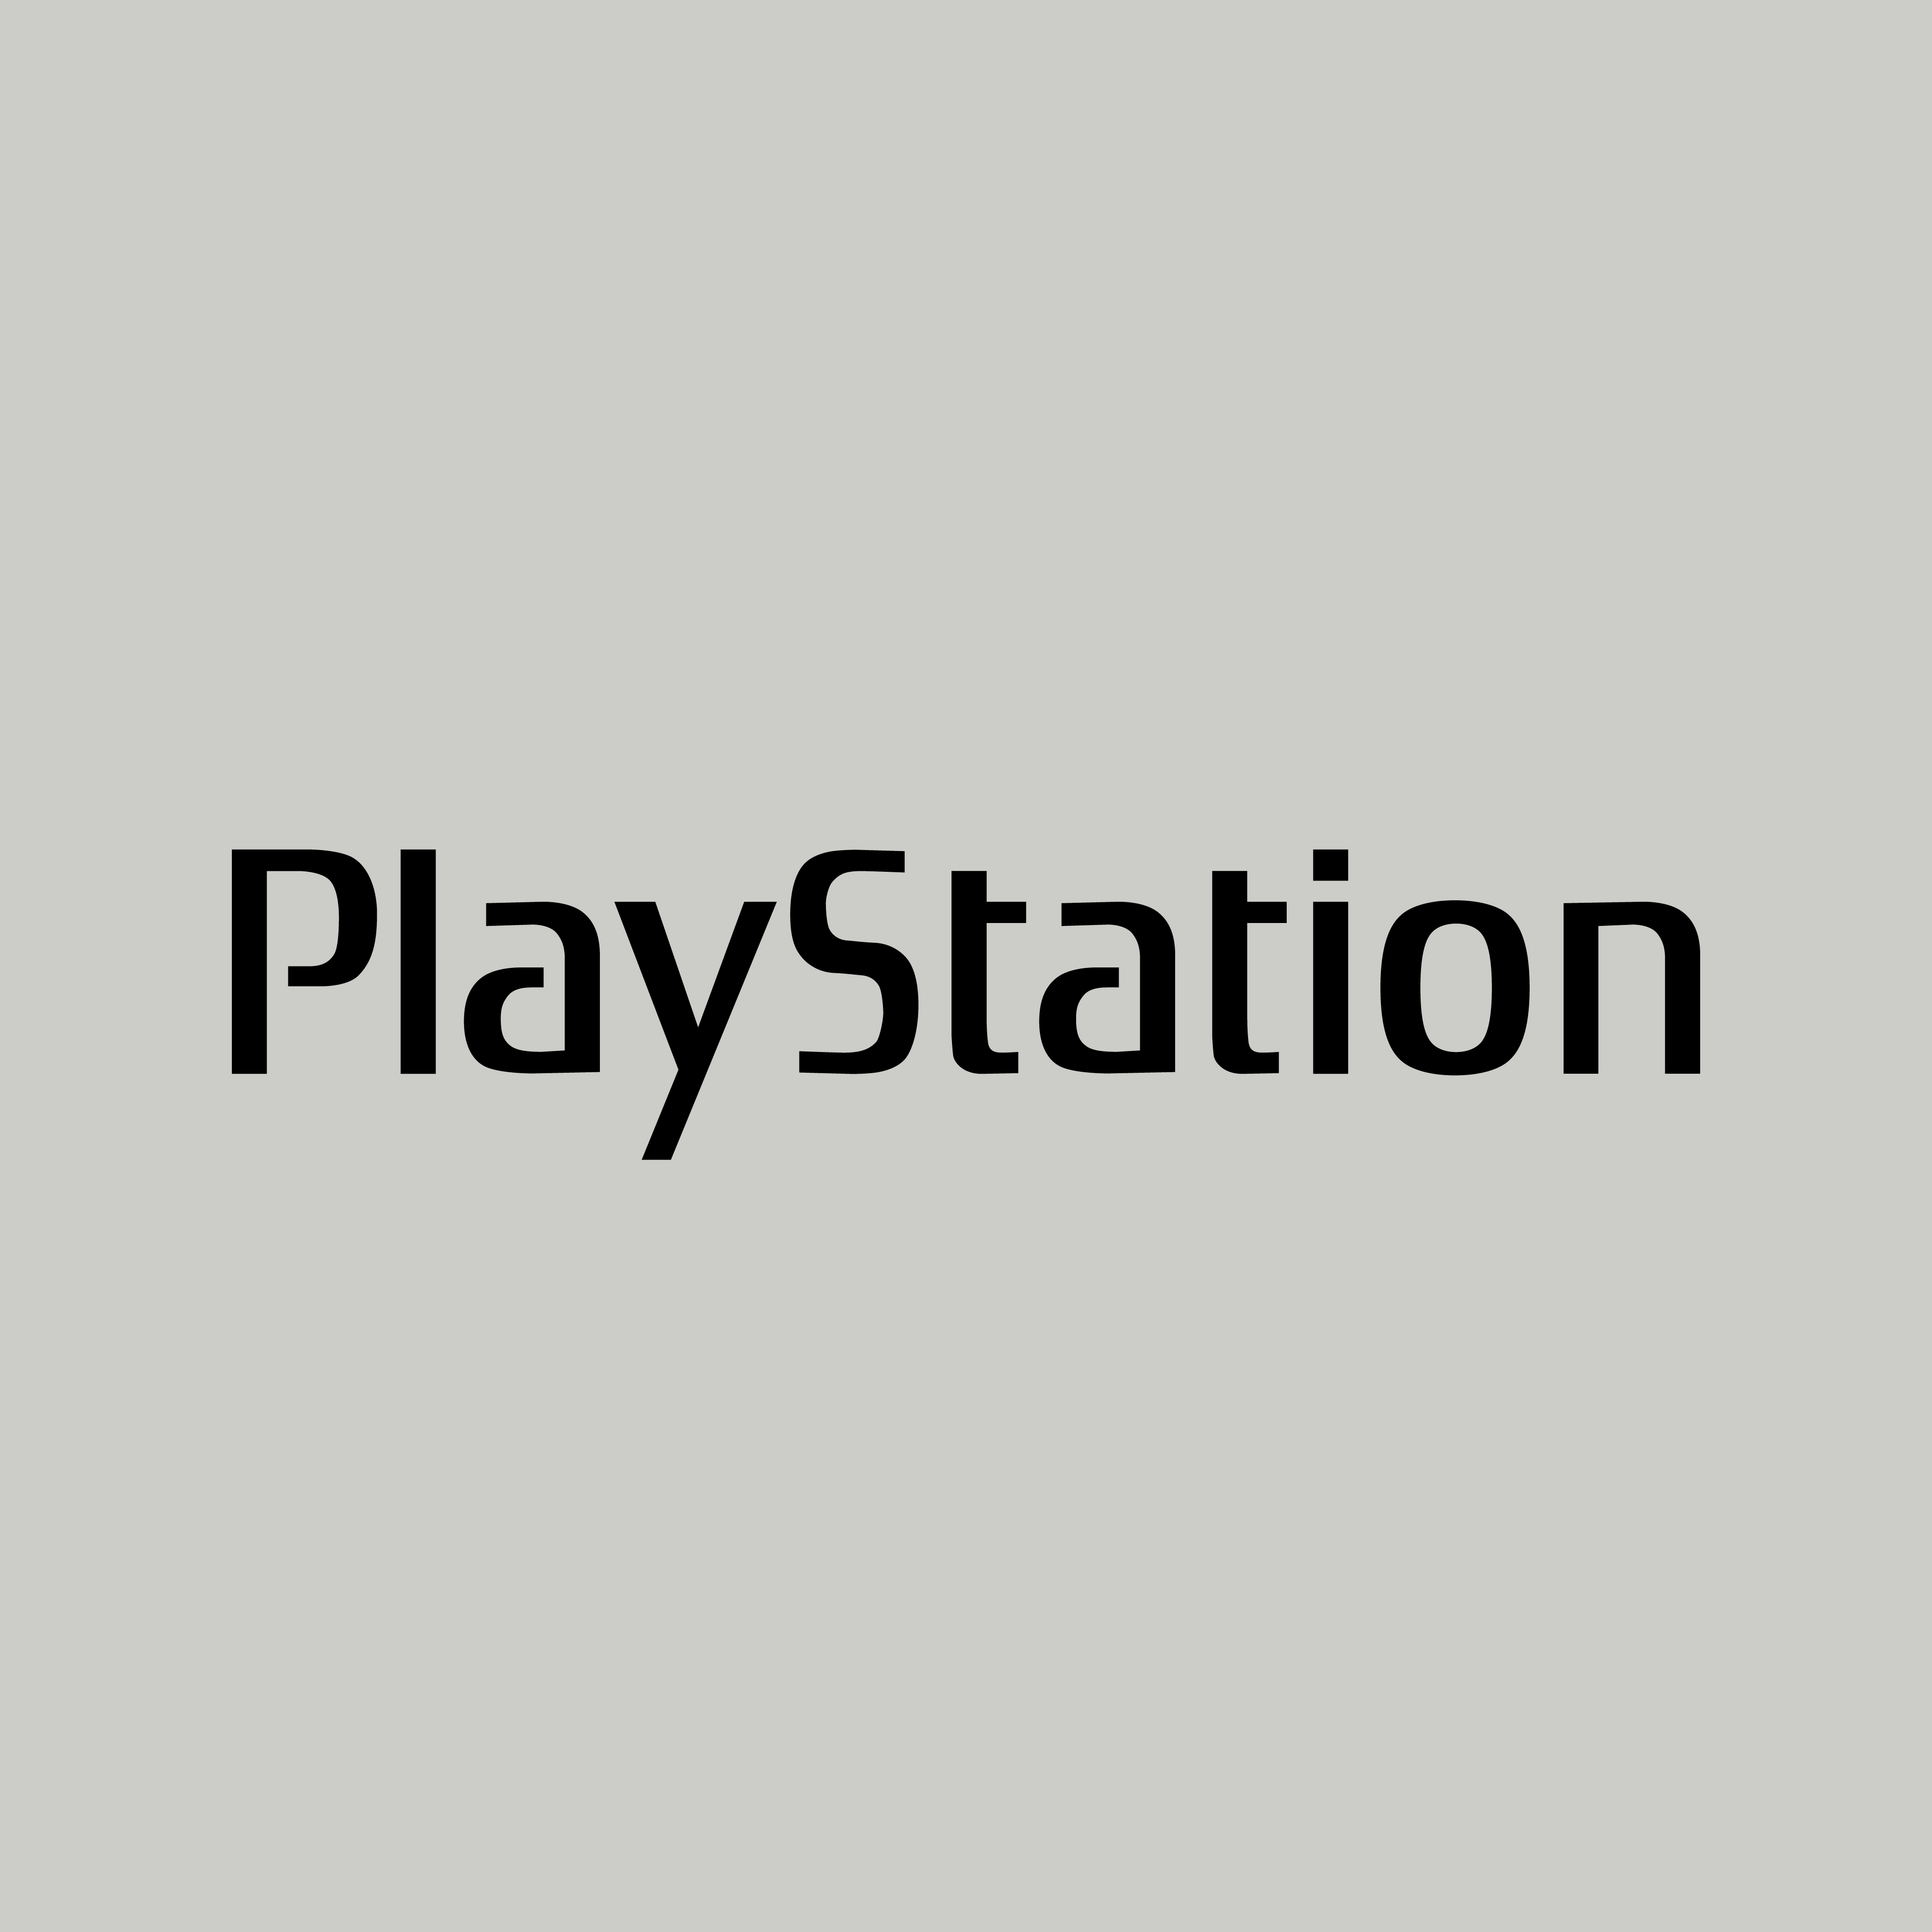 playstation logo design